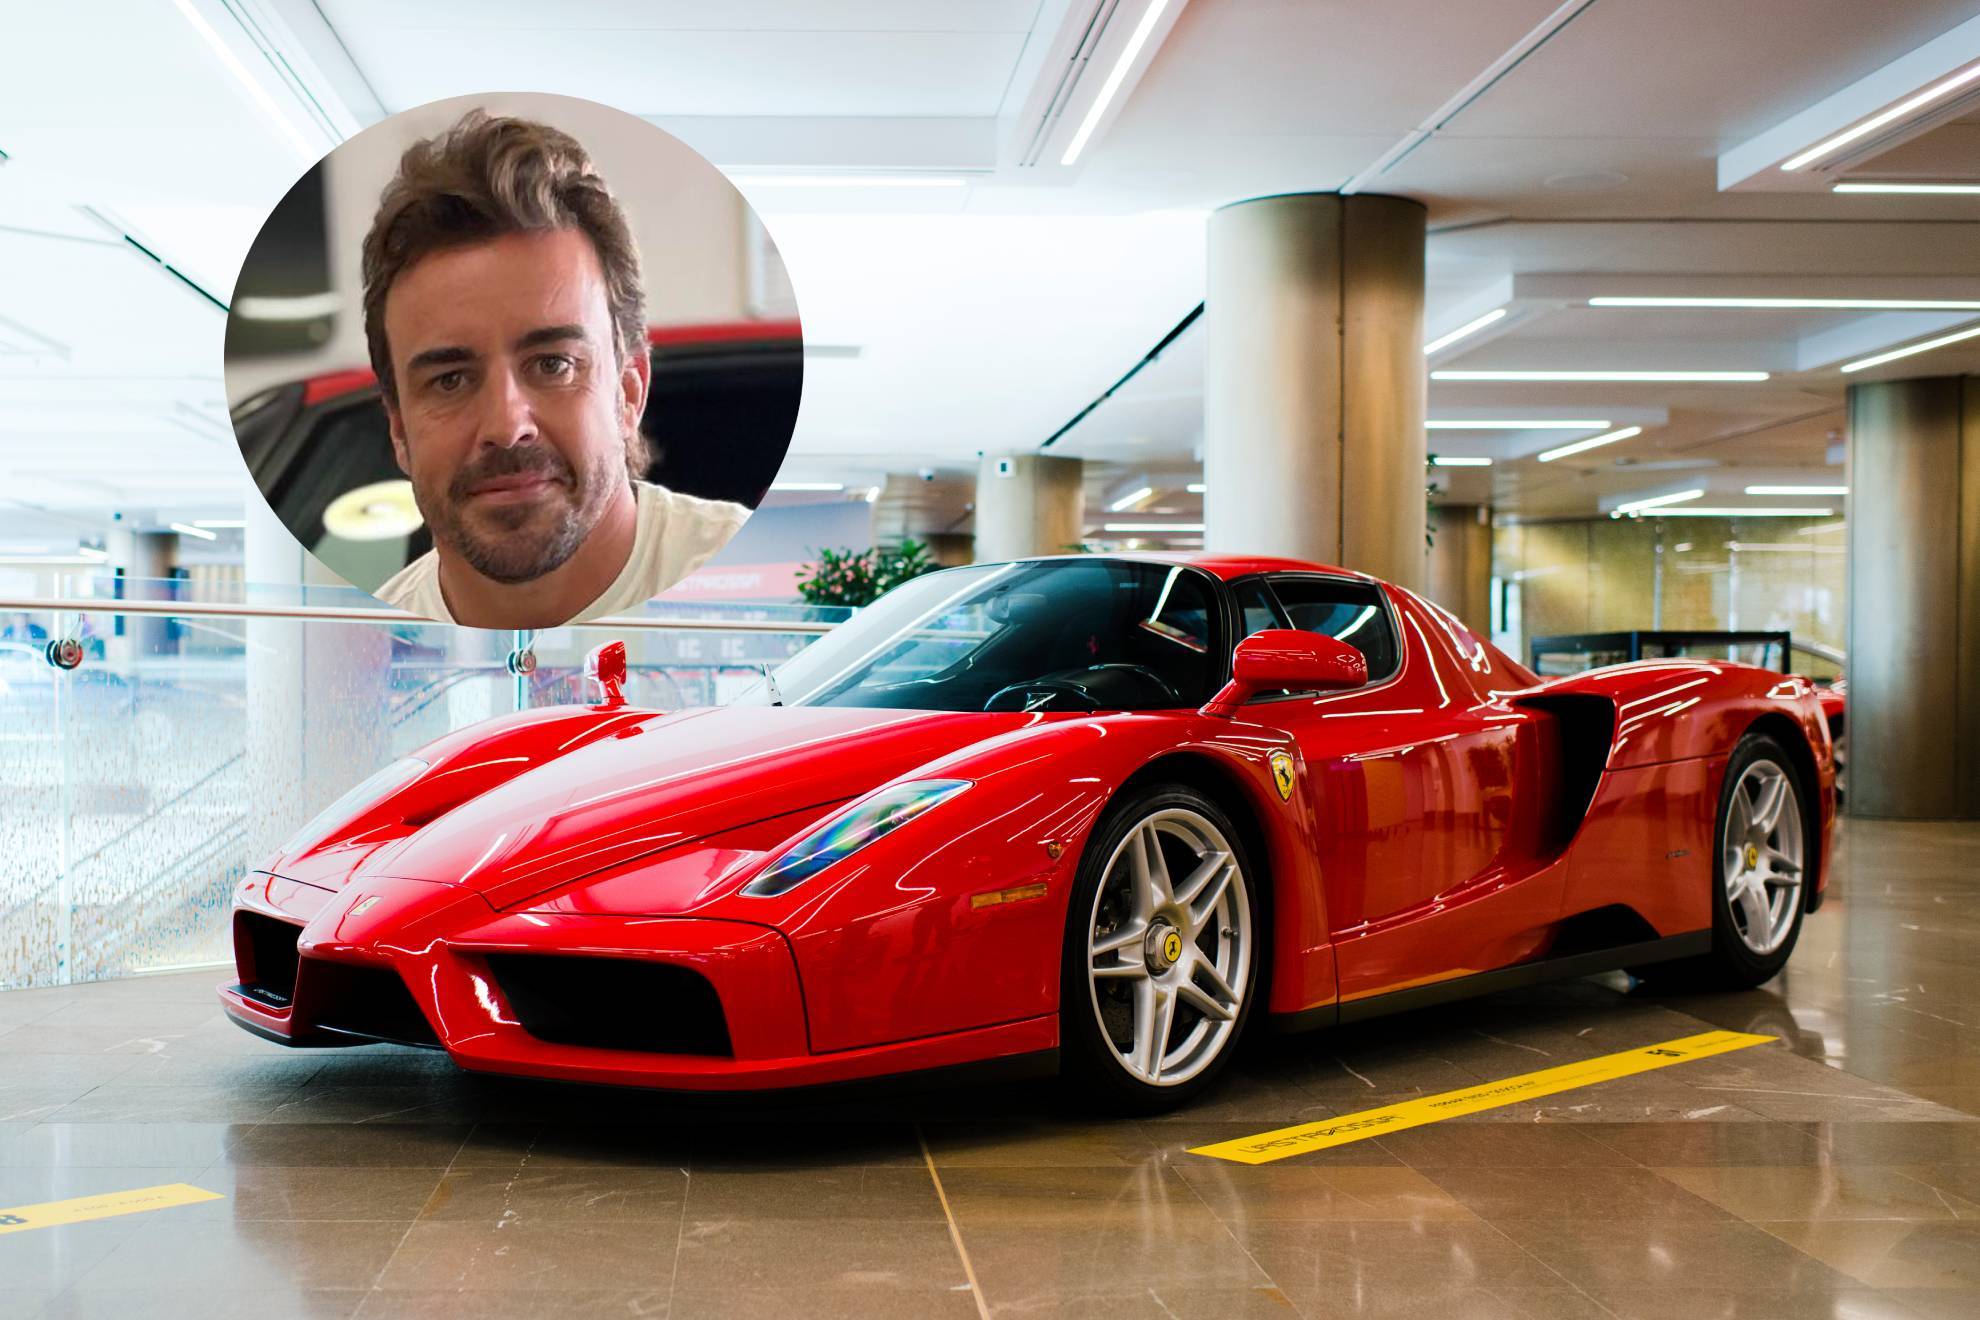 Fernando Alonso sells his Ferrari Enzo